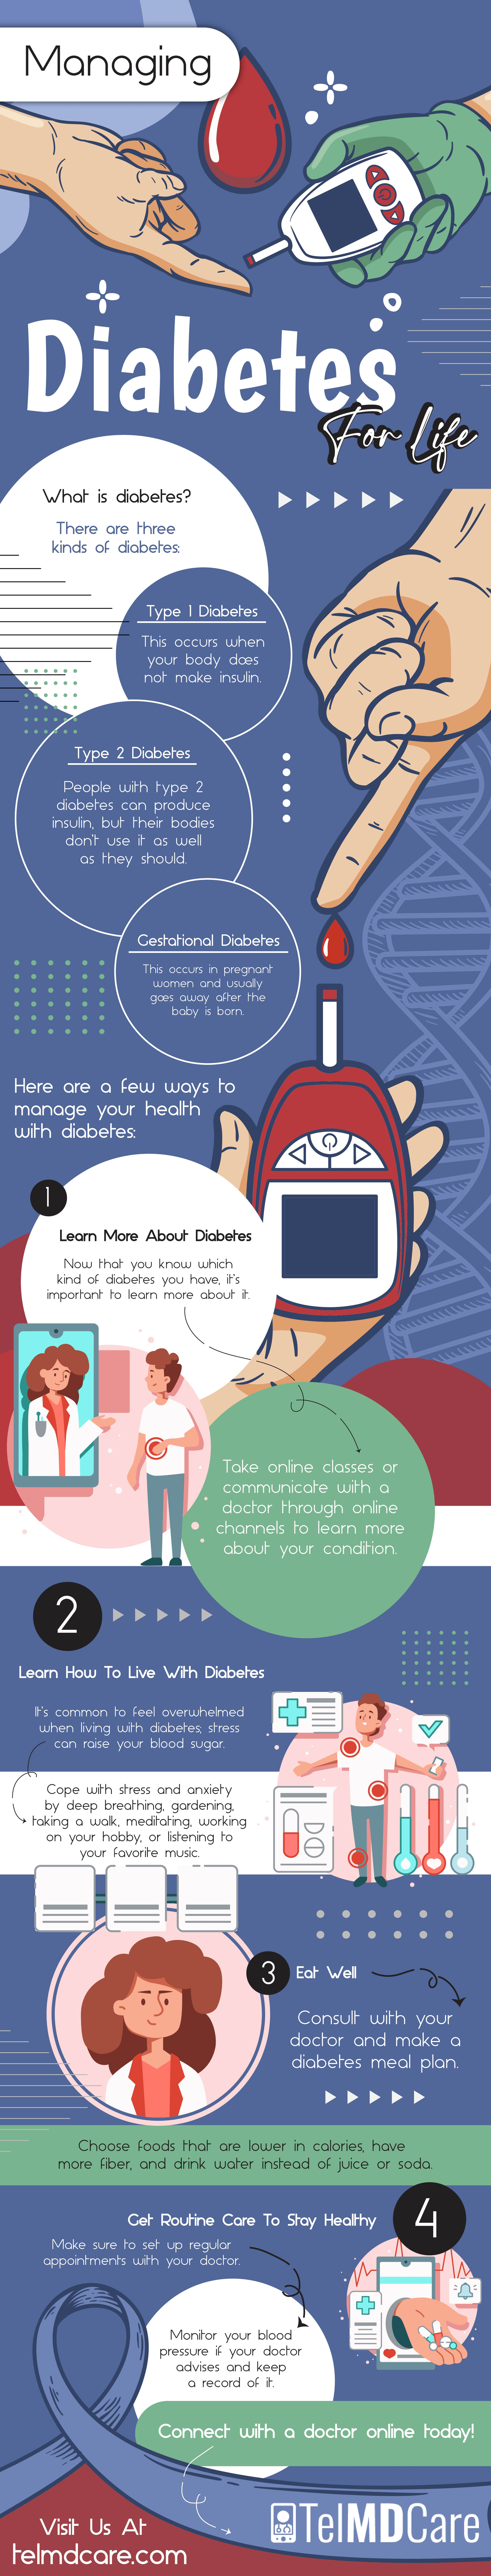 Managing Diabetes For Life